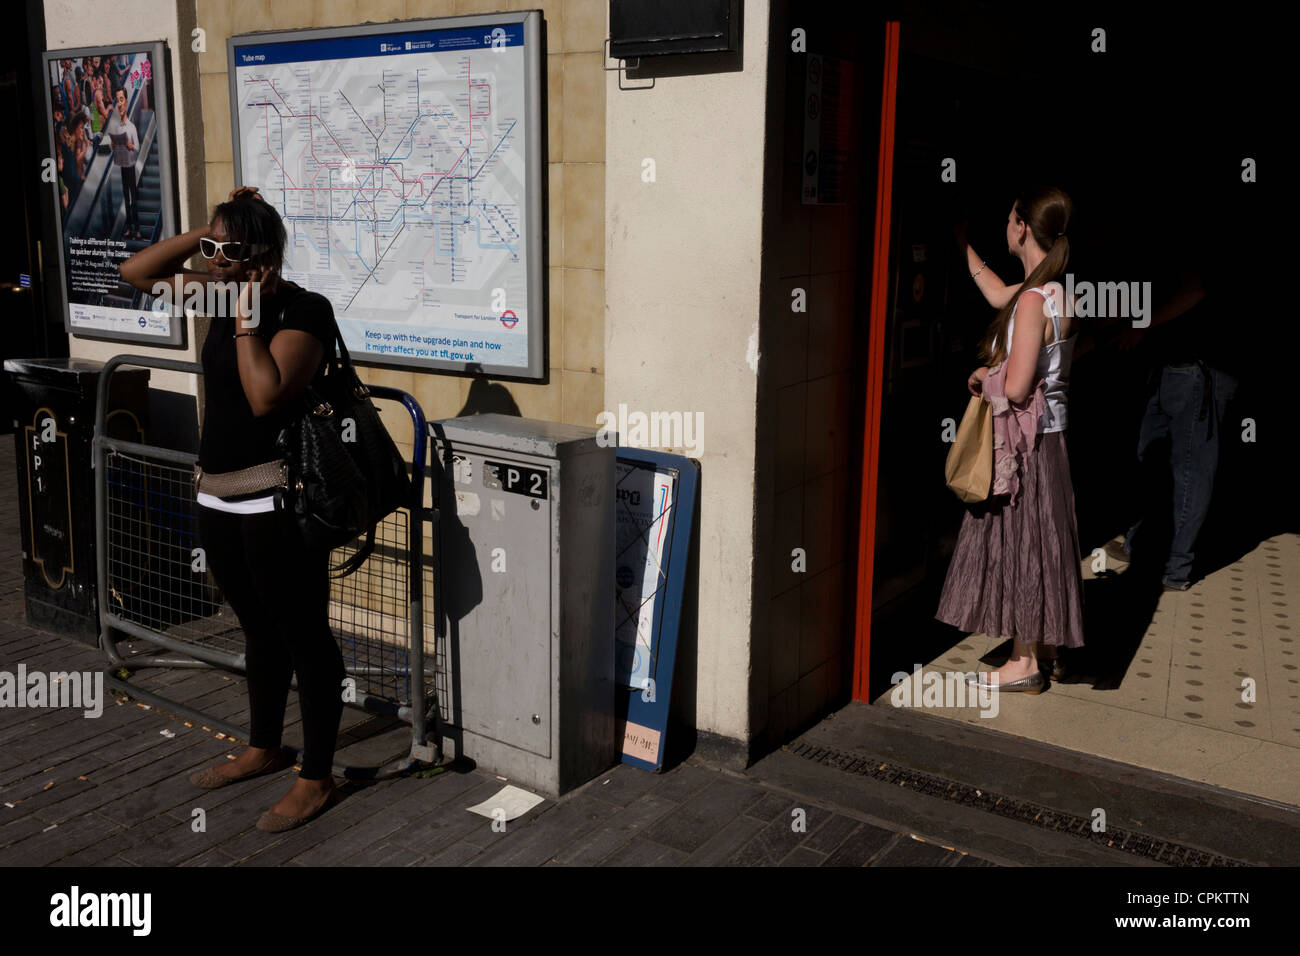 Londoners wearing sunglasses outside Sloane Square underground station. Stock Photo